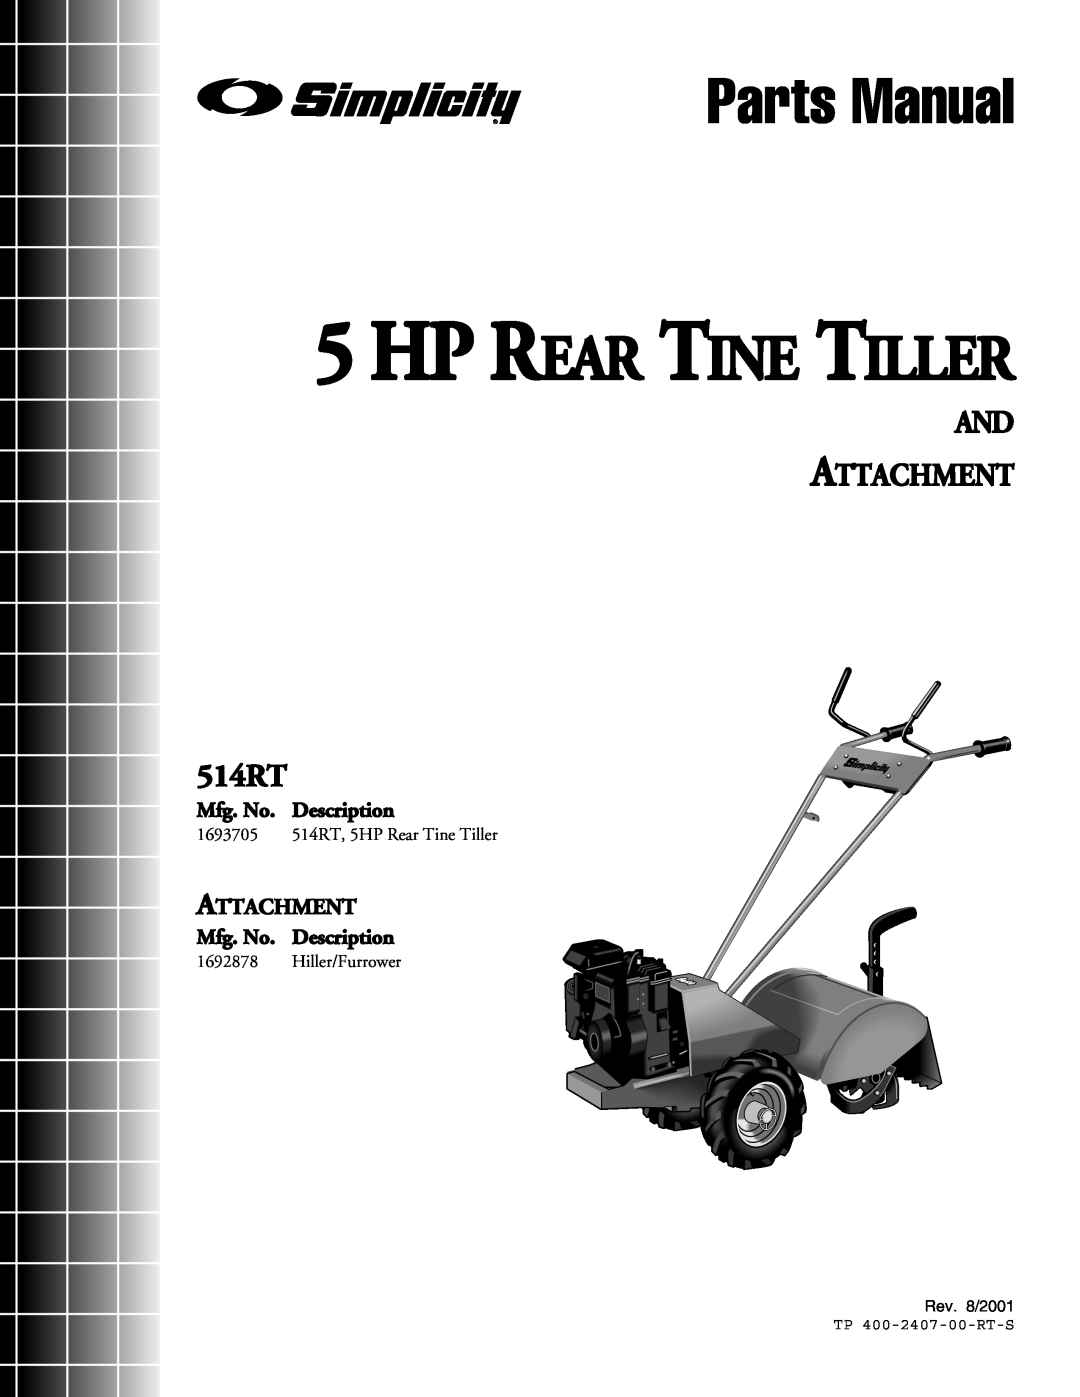 Simplicity manual Parts Manual, Hp Rear Tine Tiller, AND ATTACHMENT 514RT, Attachment, Mfg. No. Description 